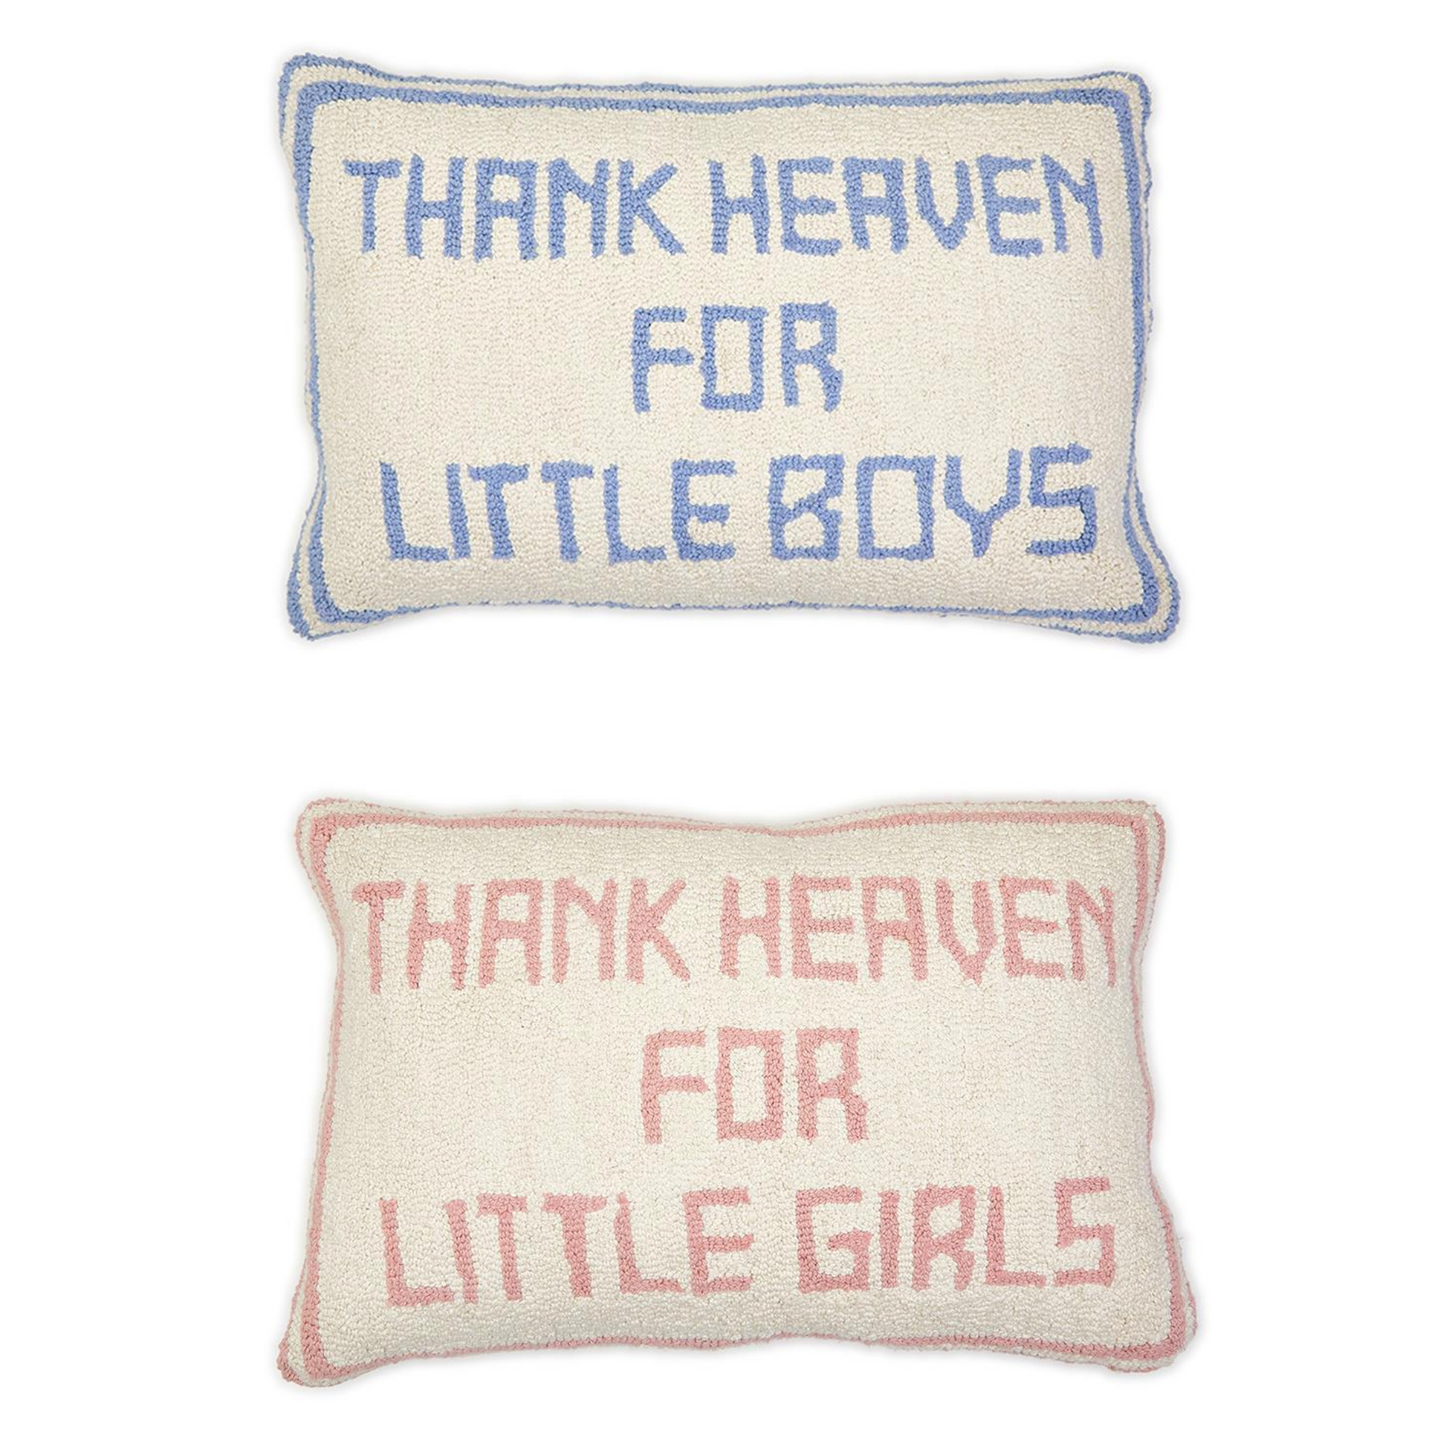 Thank Heavens Baby Pillows